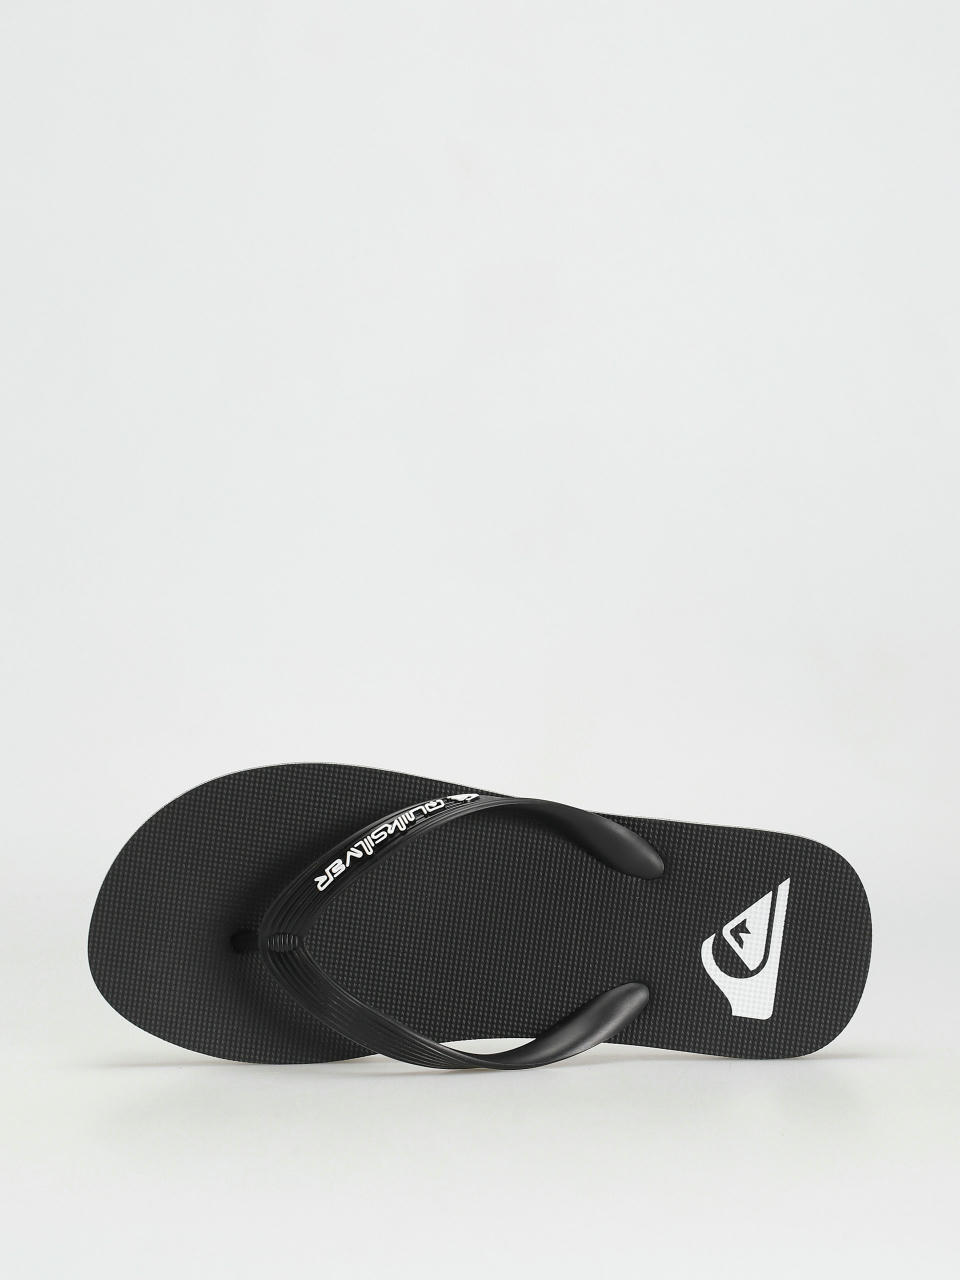 Quiksilver Molokai Core Thongs Sandals In Black